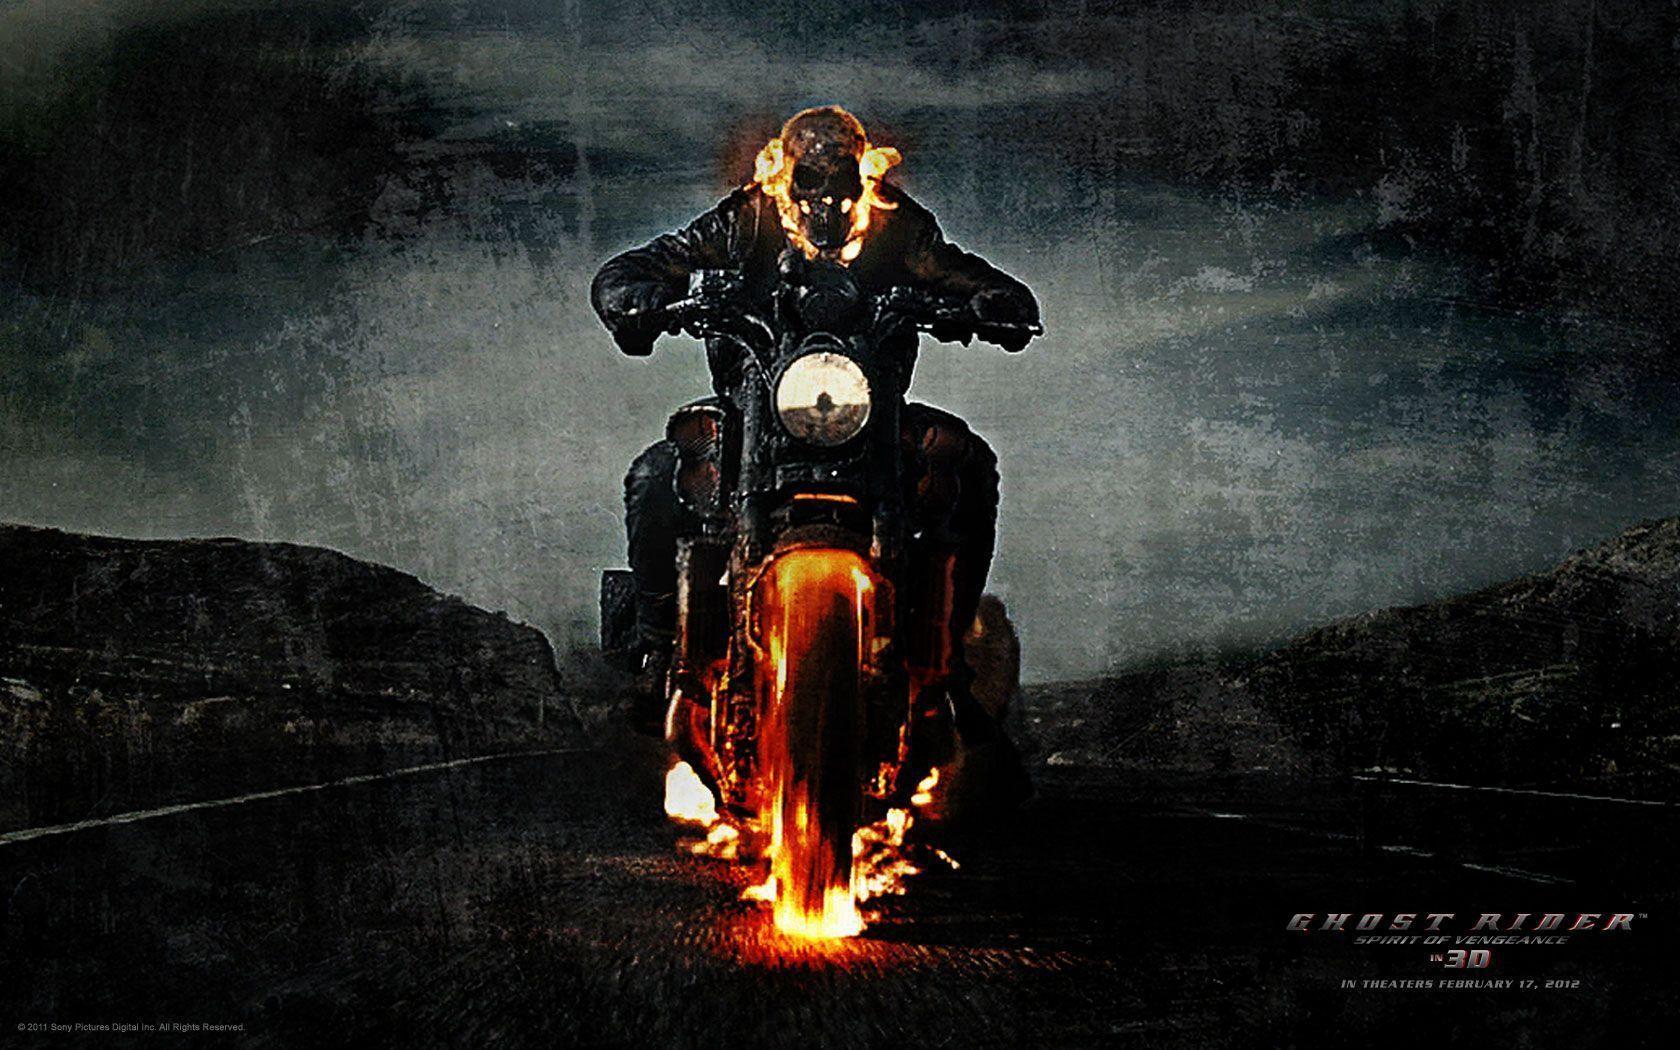 Ghost Rider Spirit of Vengeance wallpaper in high resolutions